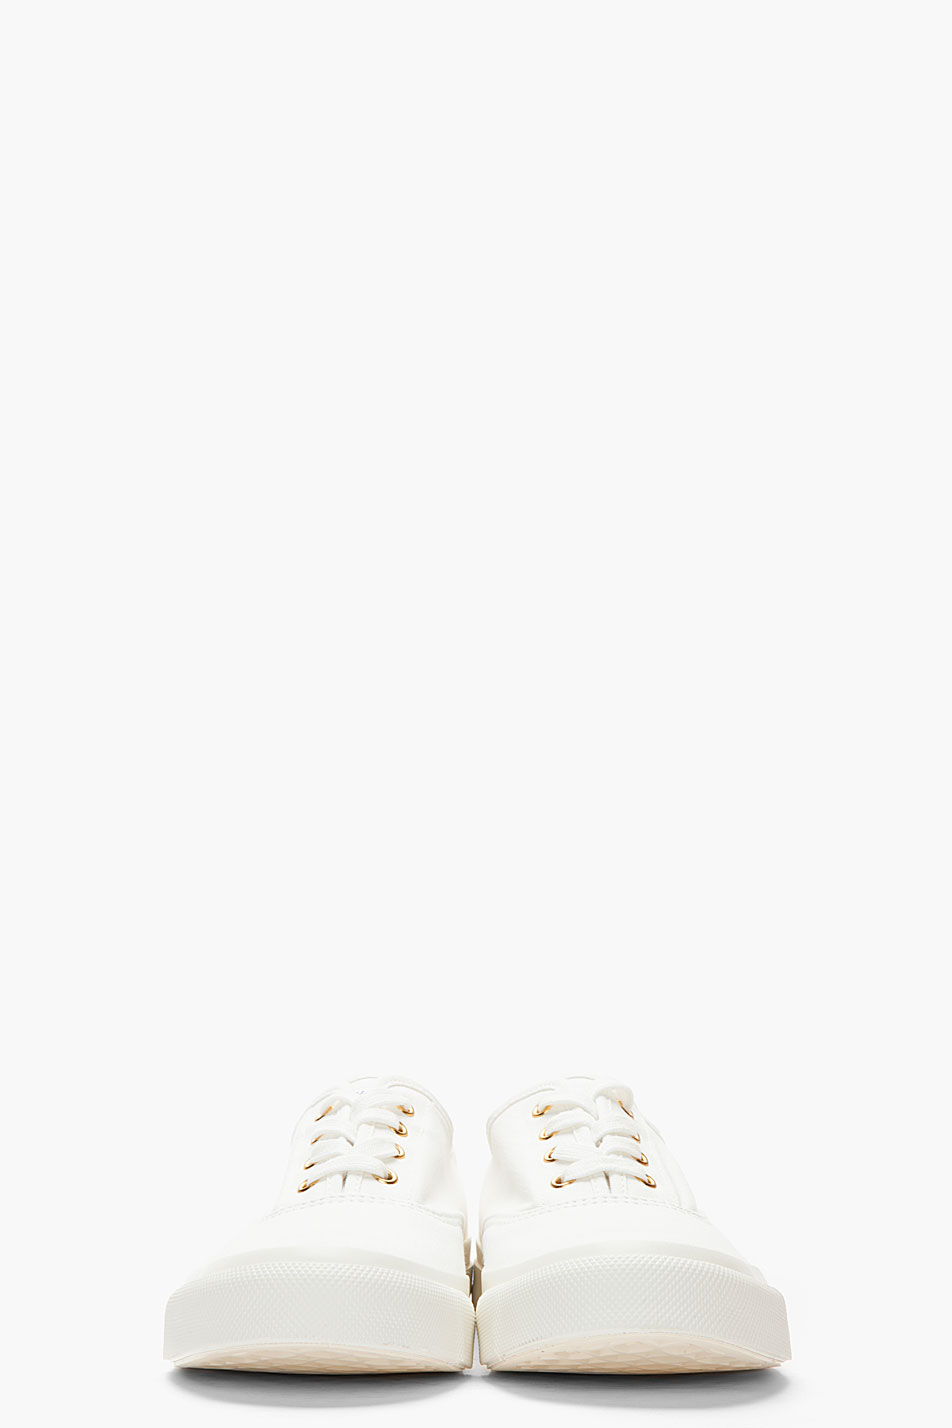 Lyst - Maison Kitsuné White Classic Canvas Sneakers in White for Men